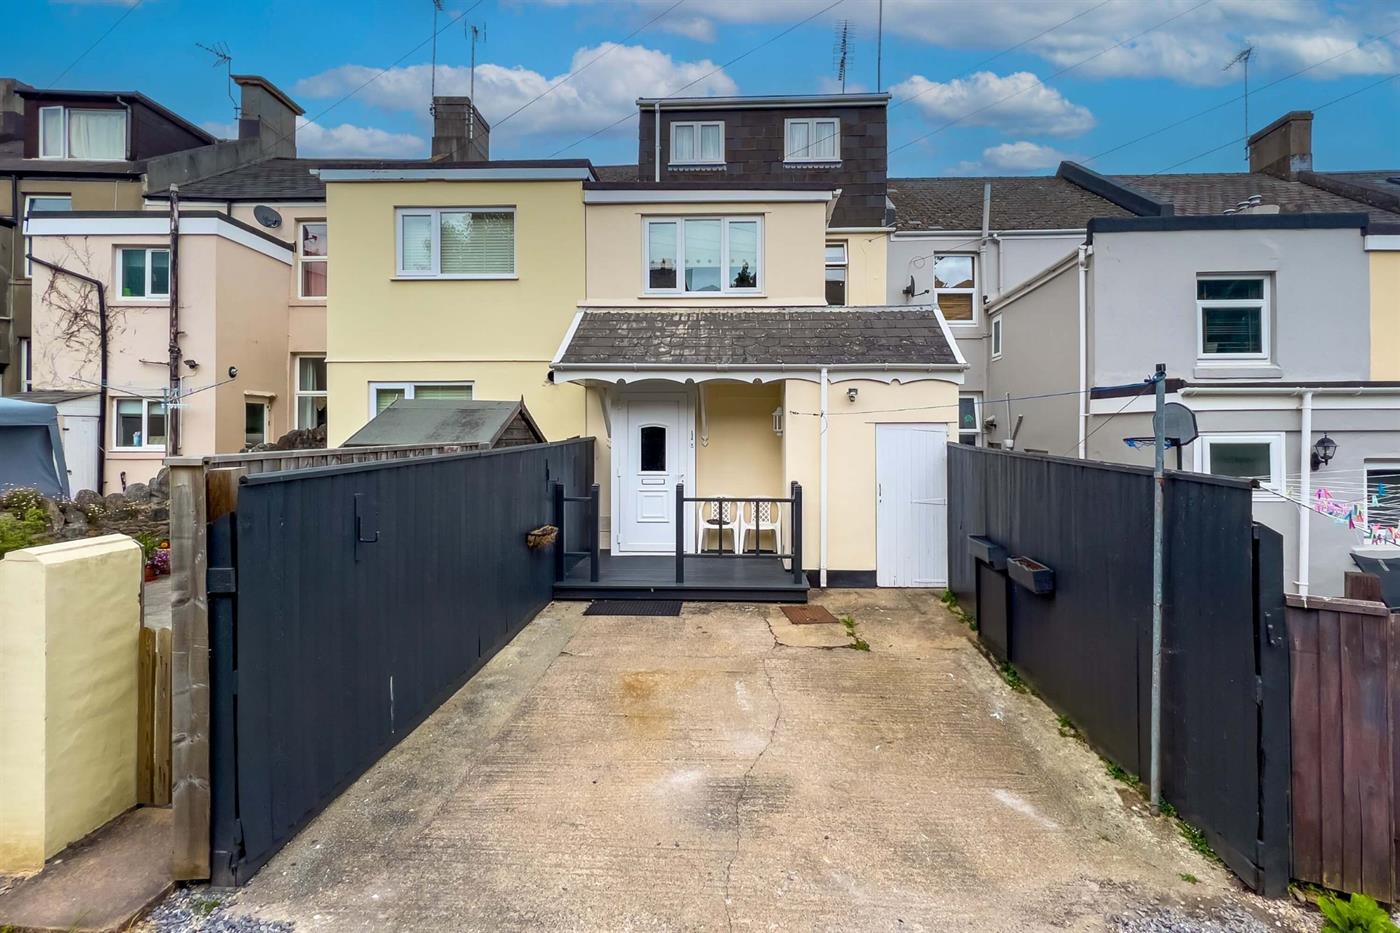 3 Bedroom Apartment to Rent: Babbacombe Road, Torquay, TQ1 3SX